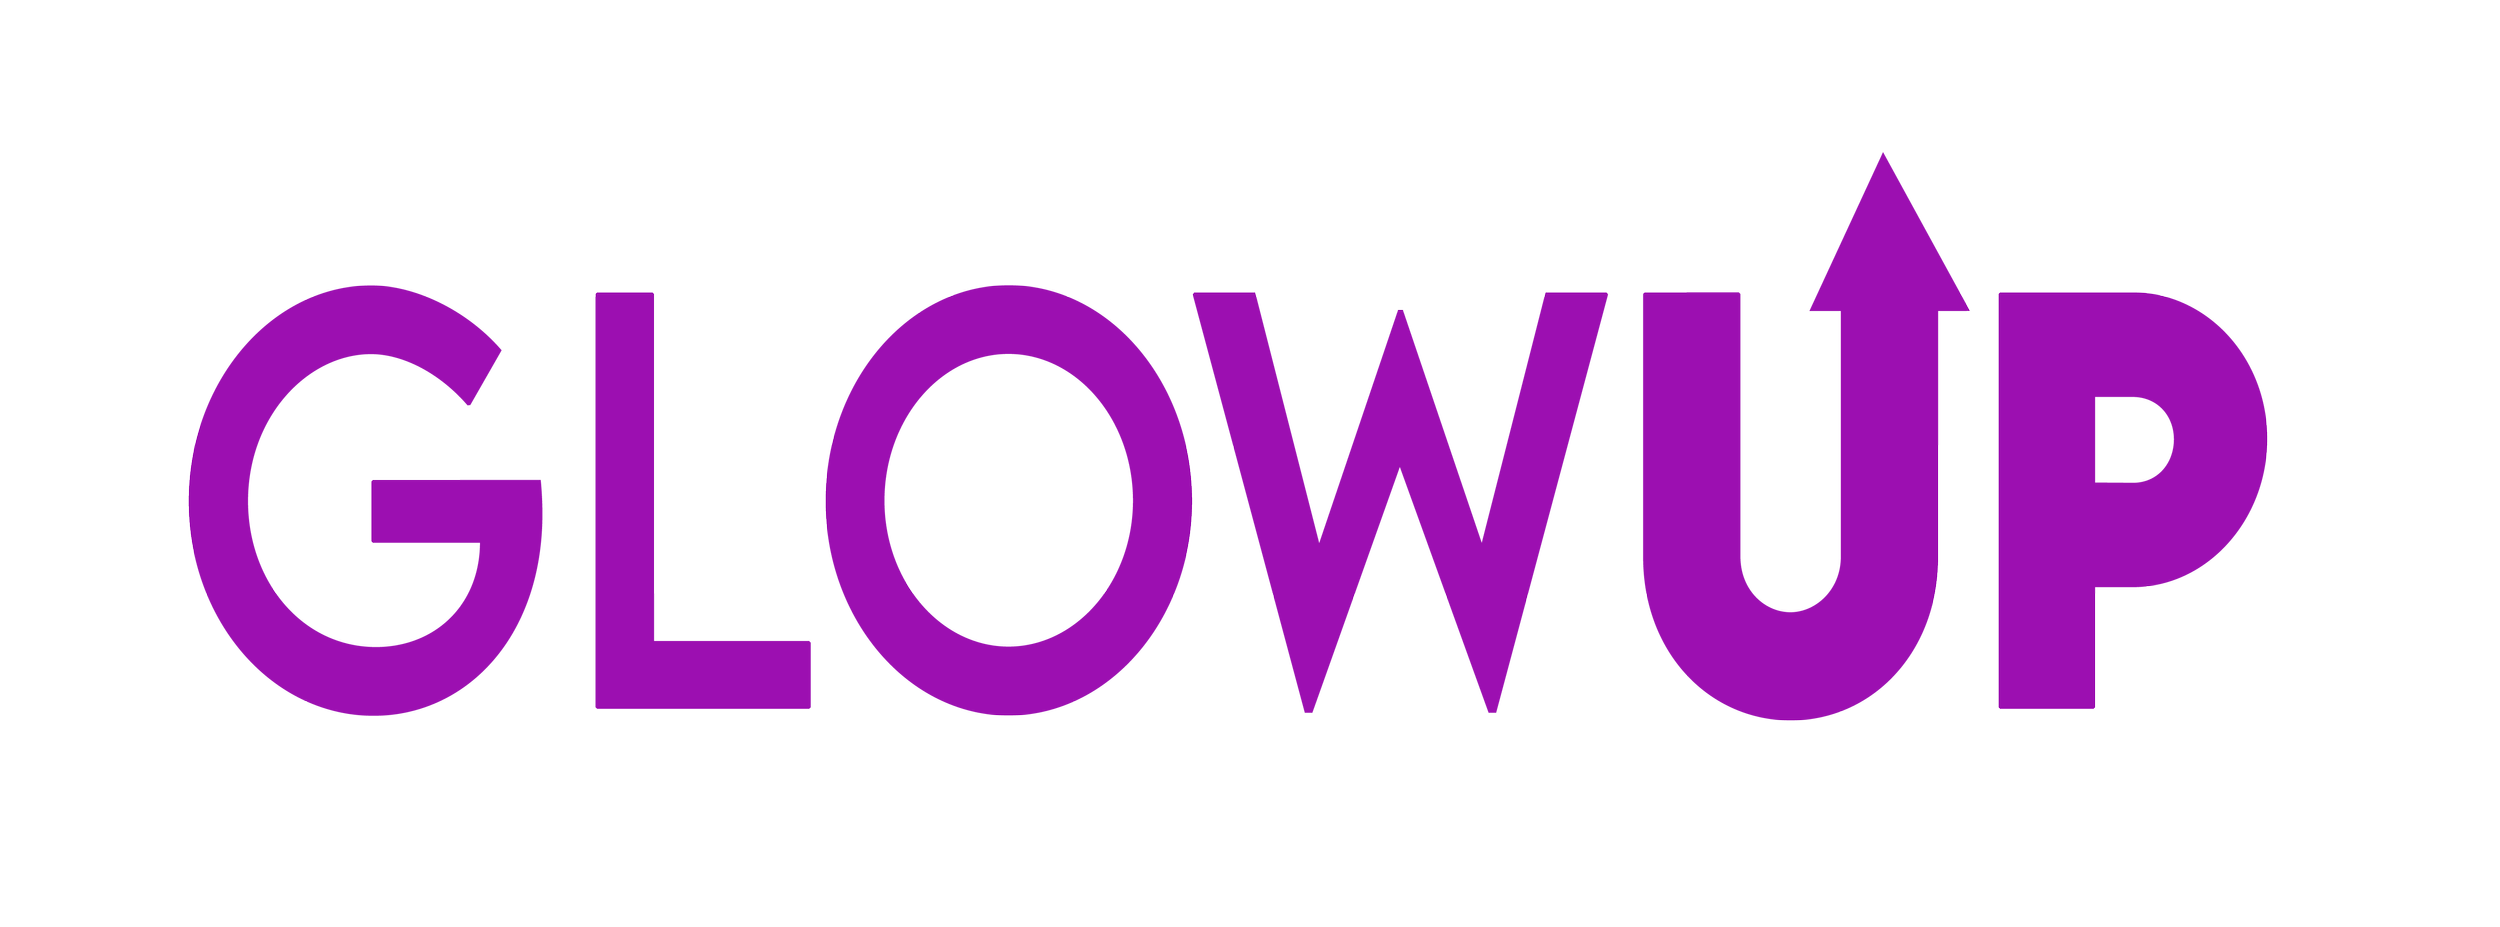 GLOWUP-logo (1).png